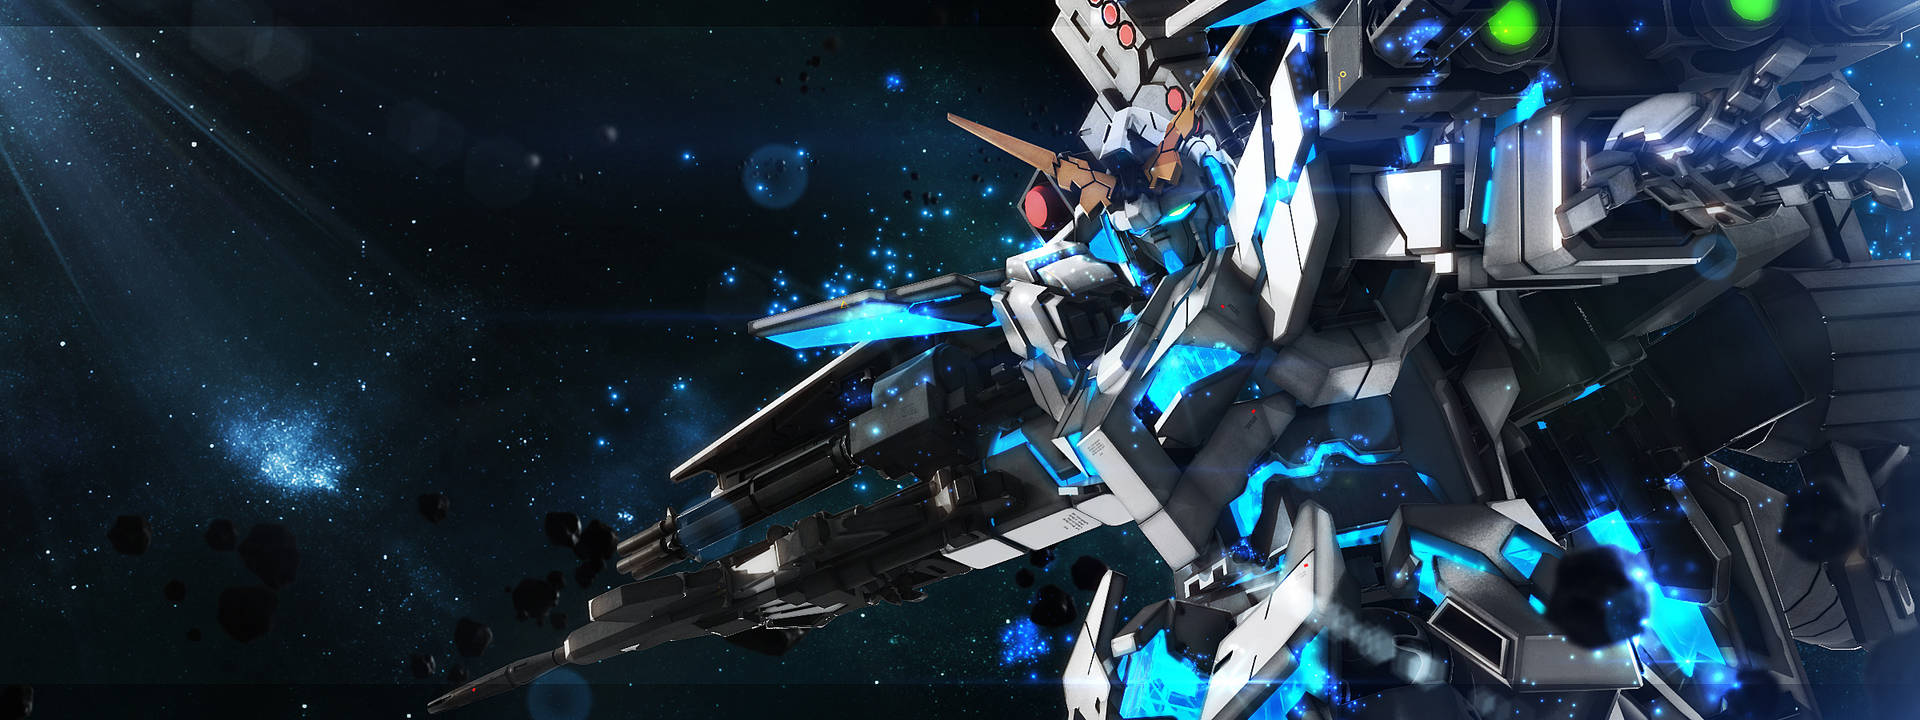 Gundam 2400X900 Wallpaper and Background Image